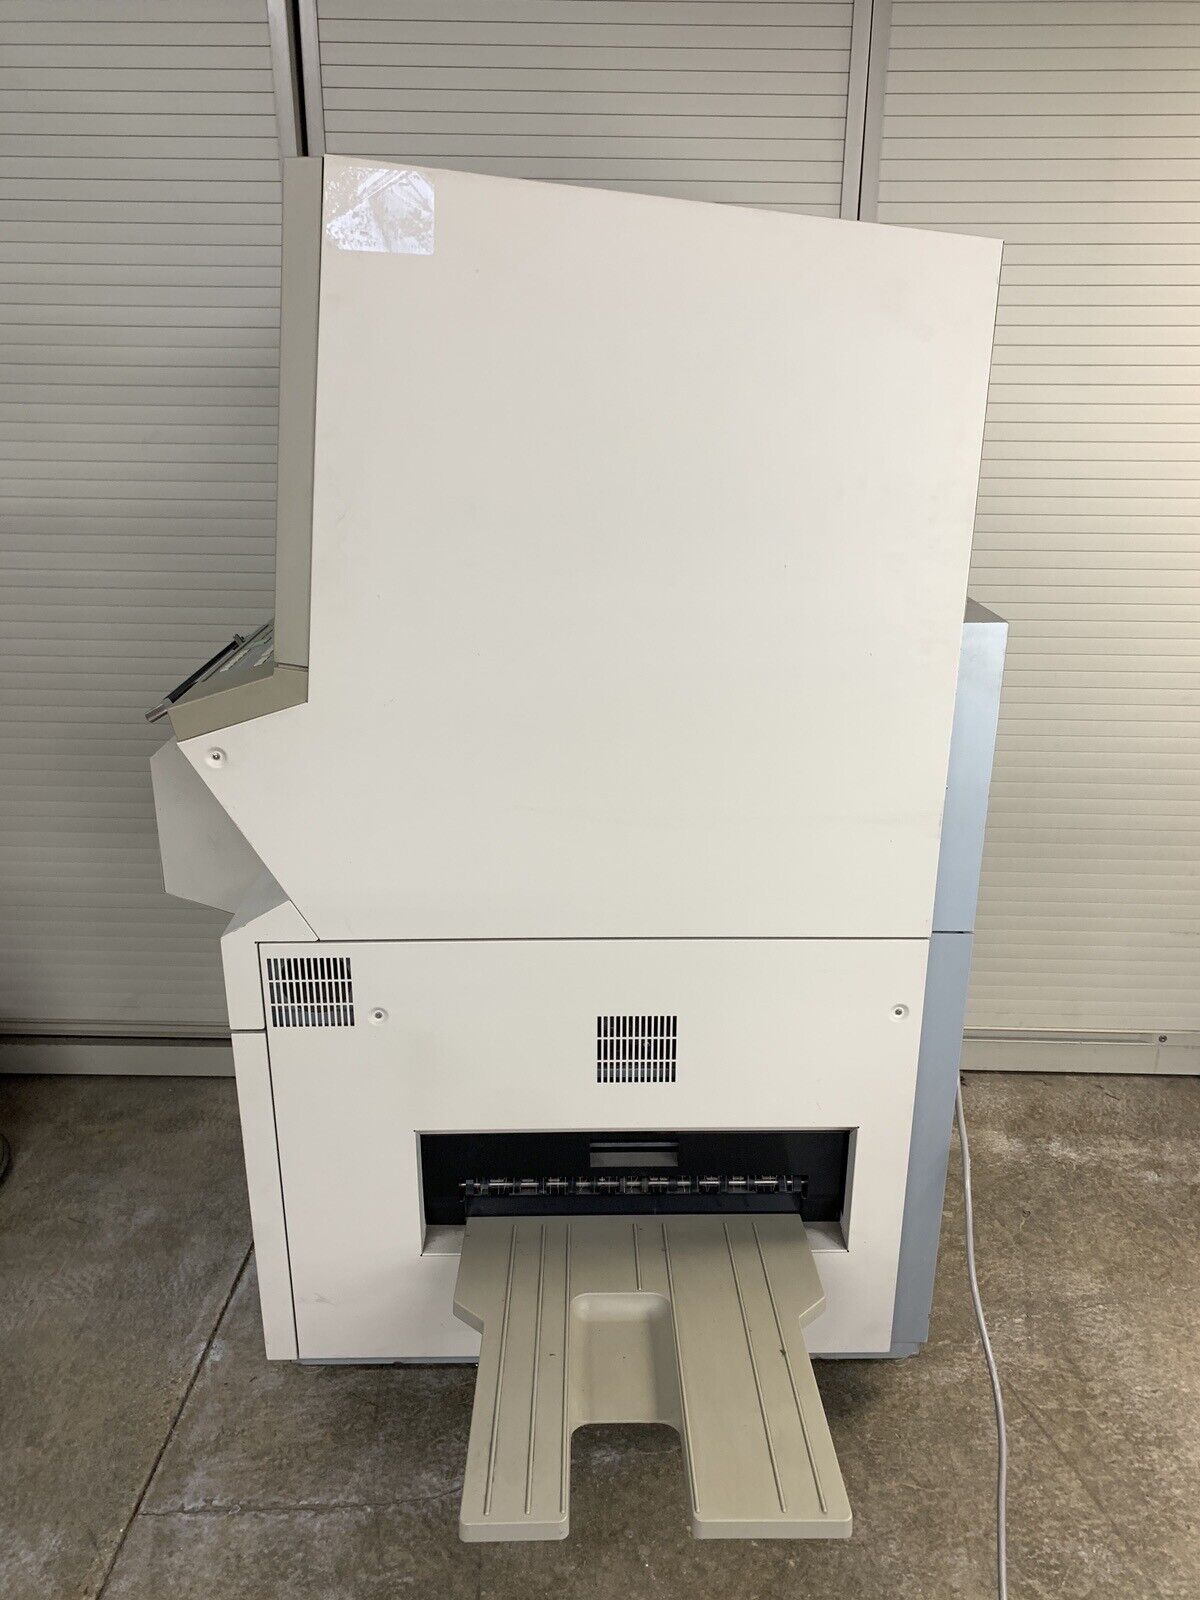 Minolta RP609Z 609Z Engineering Microform Reader Printer Semi Tested